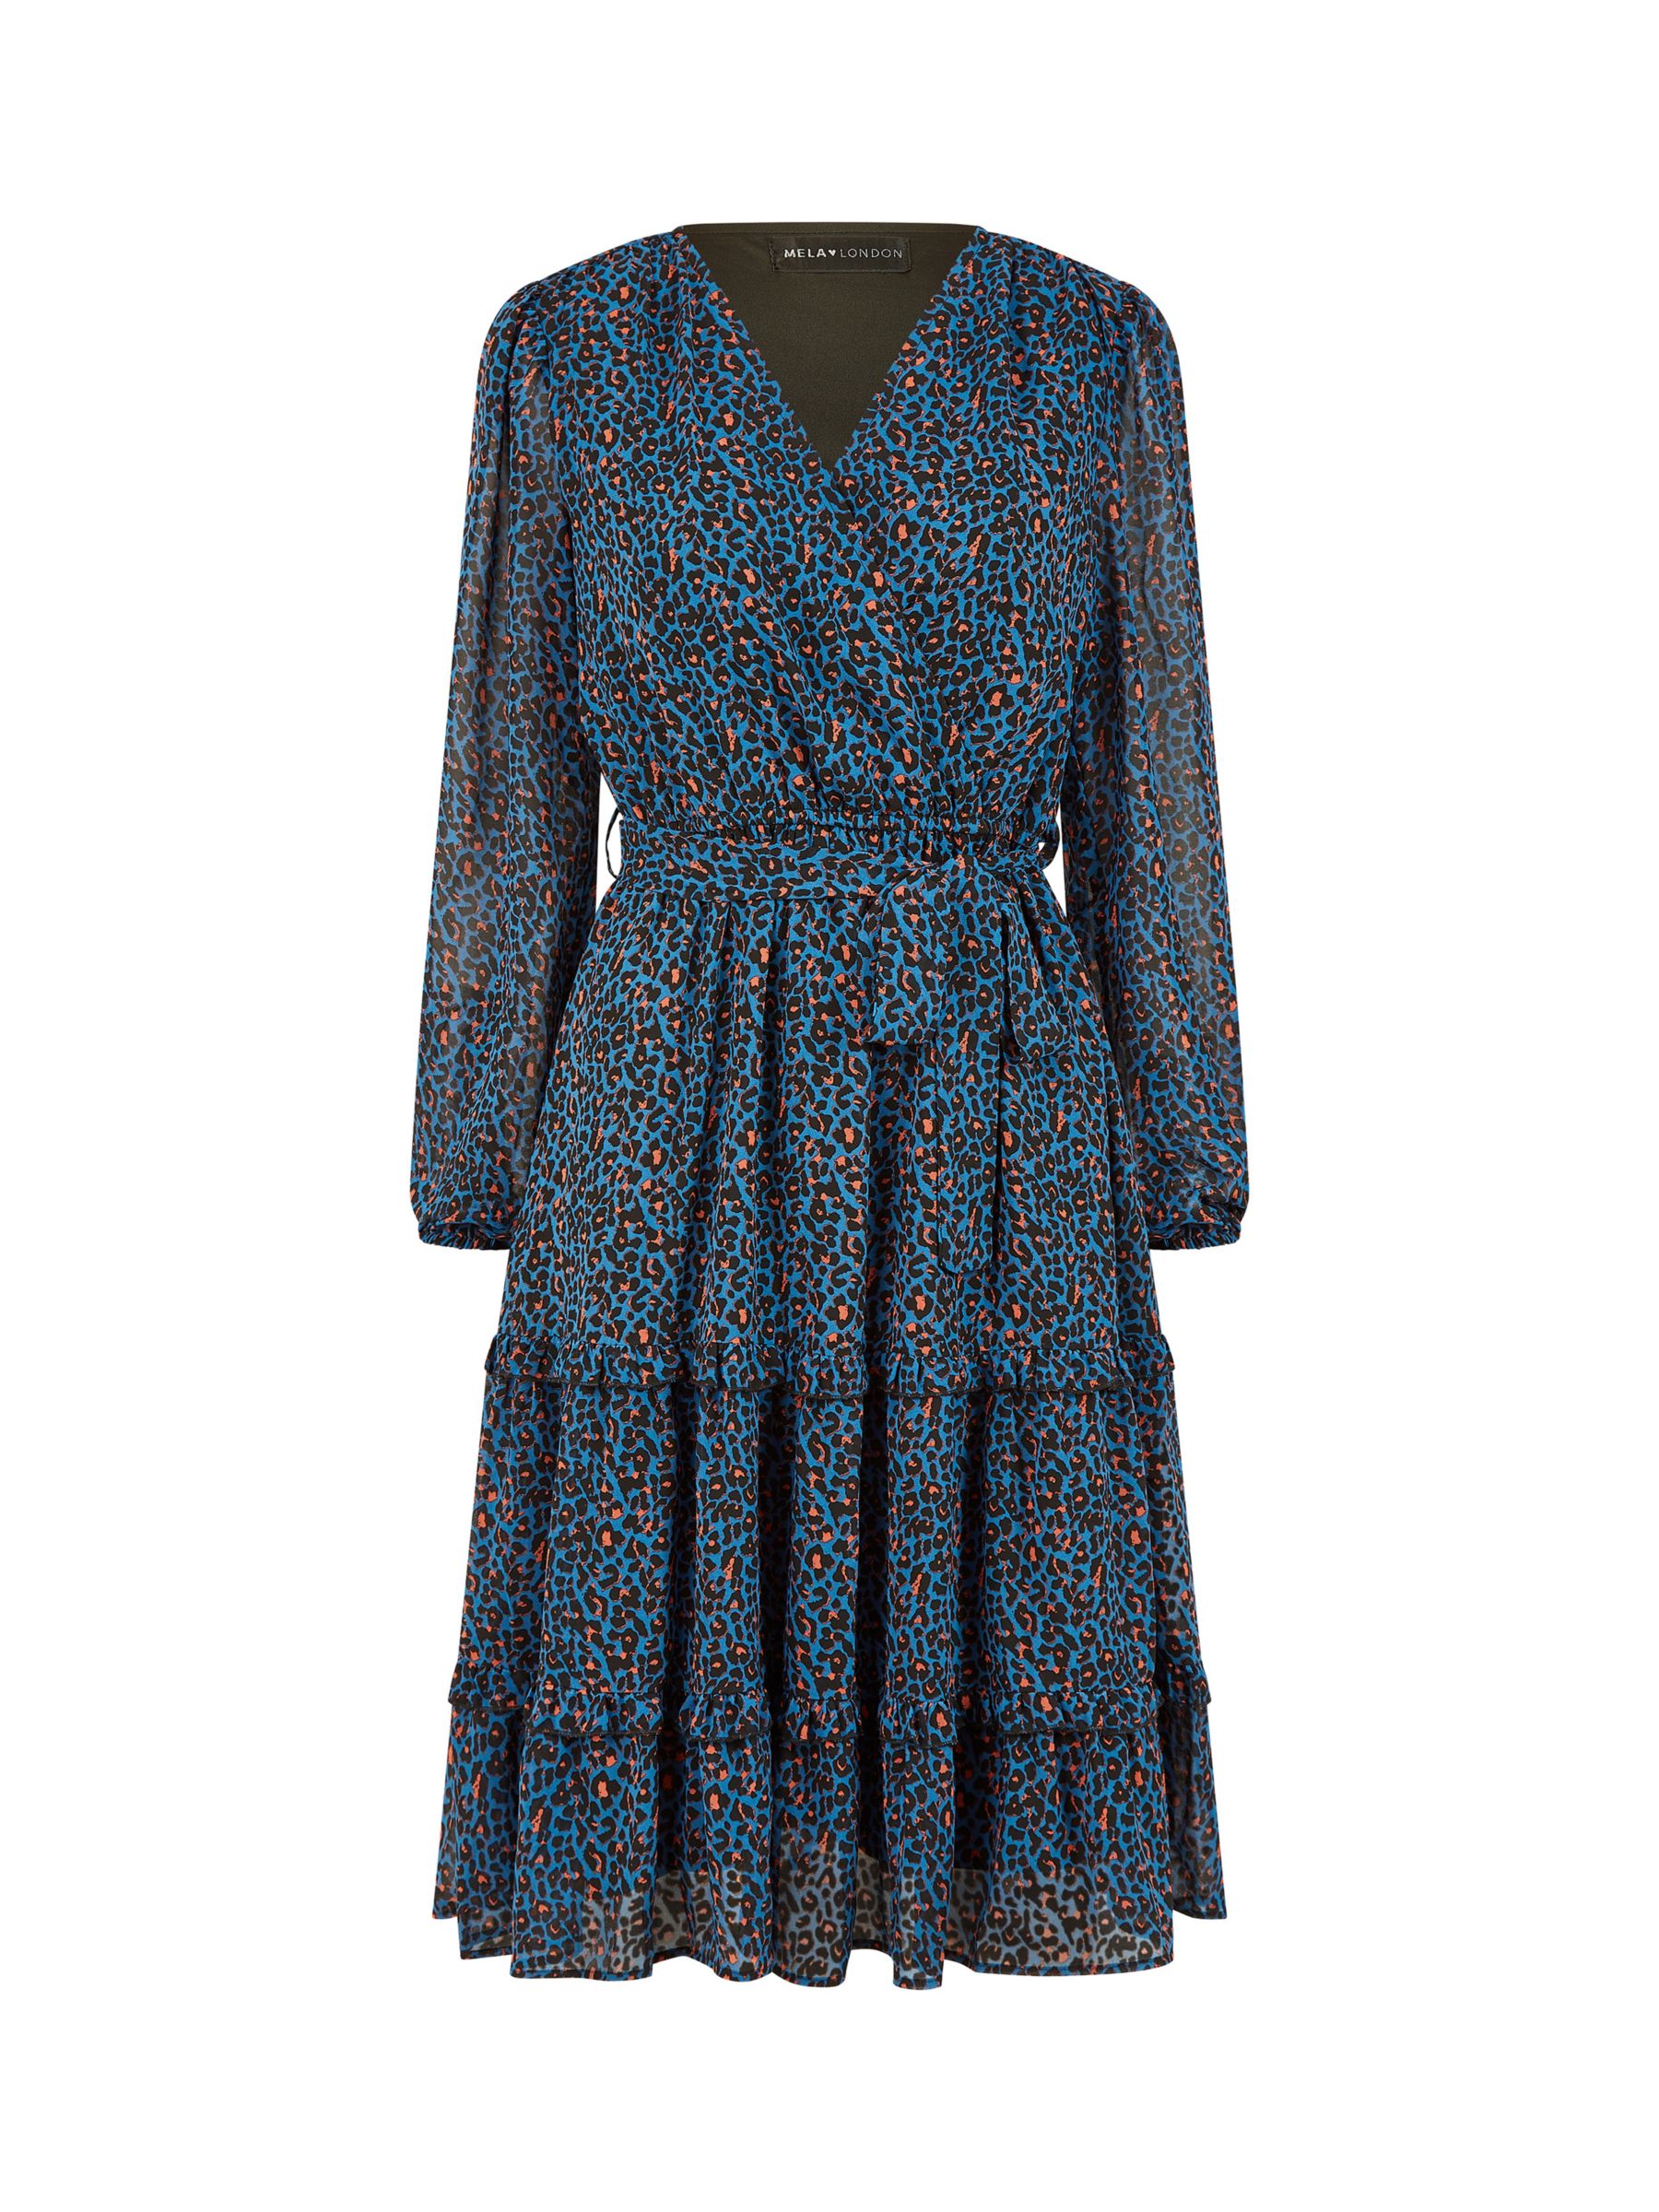 Buy Mela London Animal Wrap Tiered Dress, Blue Online at johnlewis.com